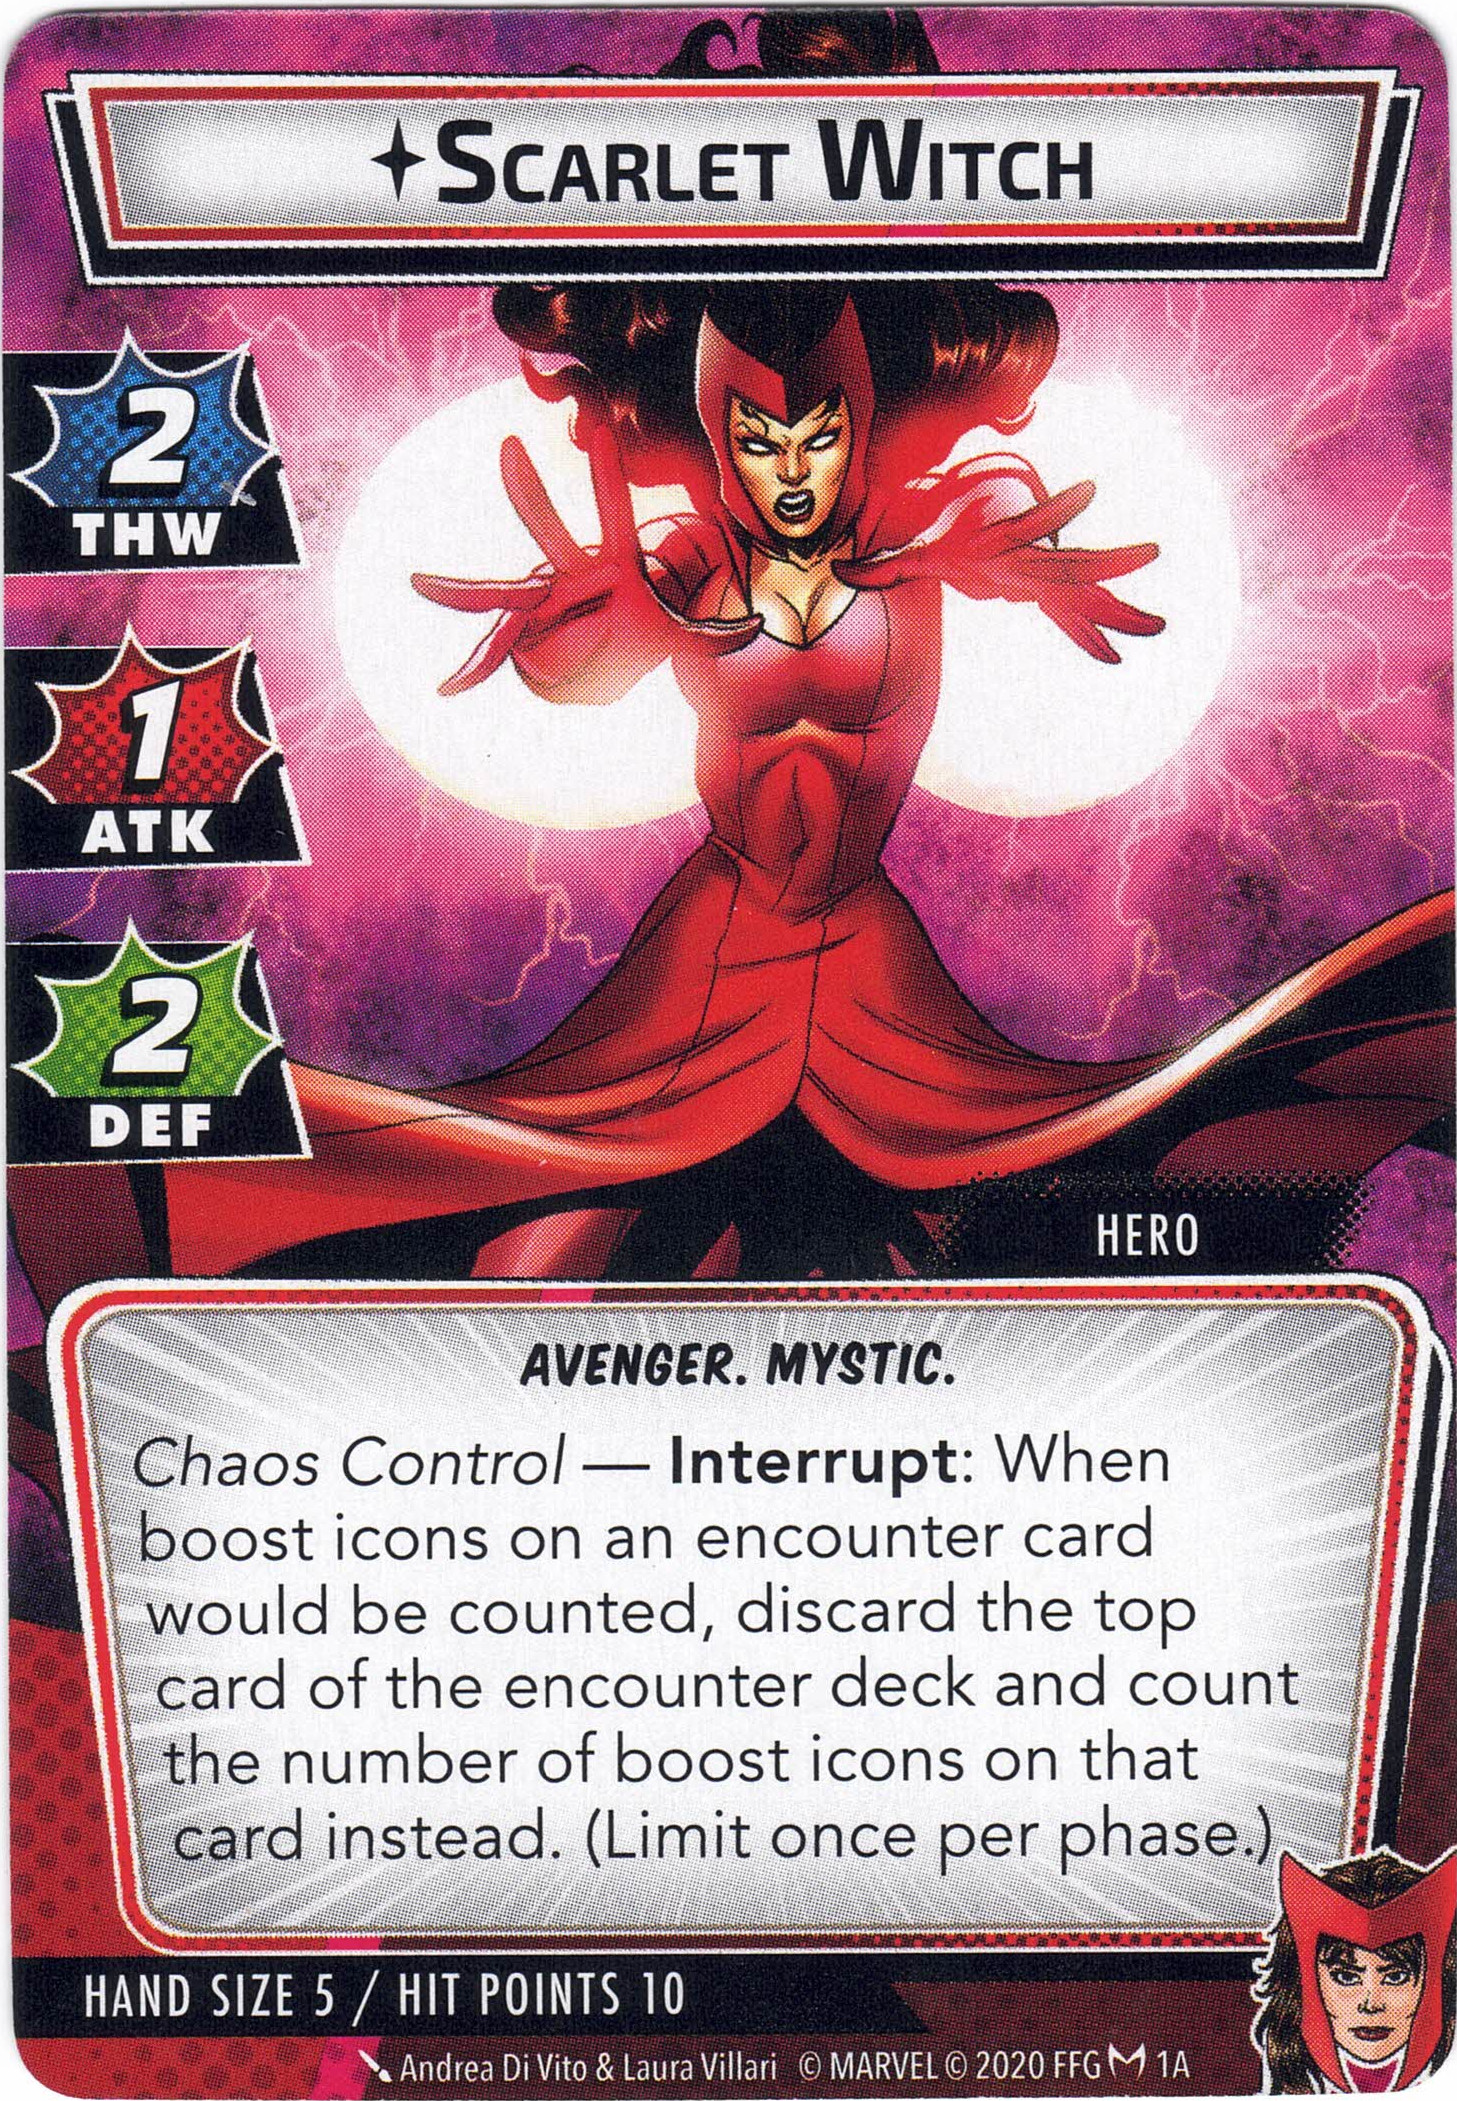 Scarlet Witch & Quicksilver #1